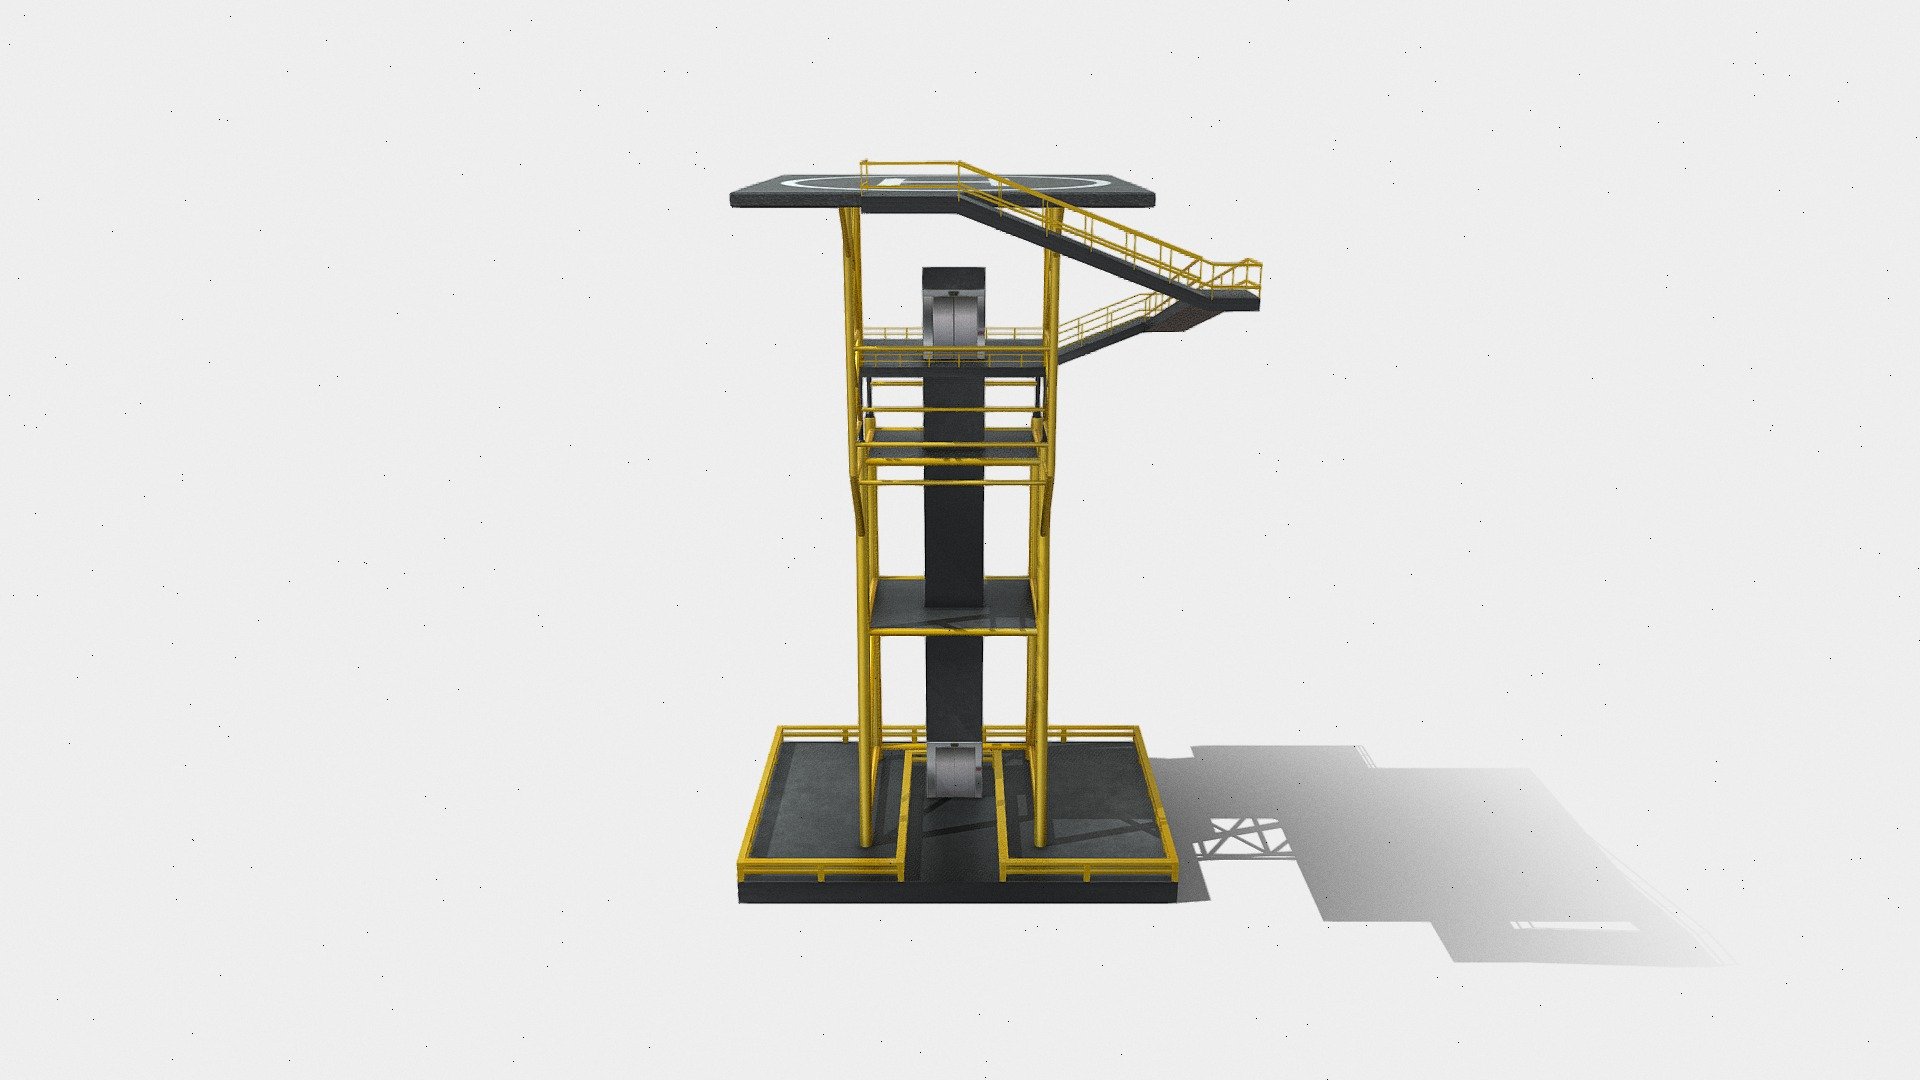 Tower_Helipad - 3D model by Charles Smith (Blitz Mobile Apps) (@BlitzMobileApp) 3d model